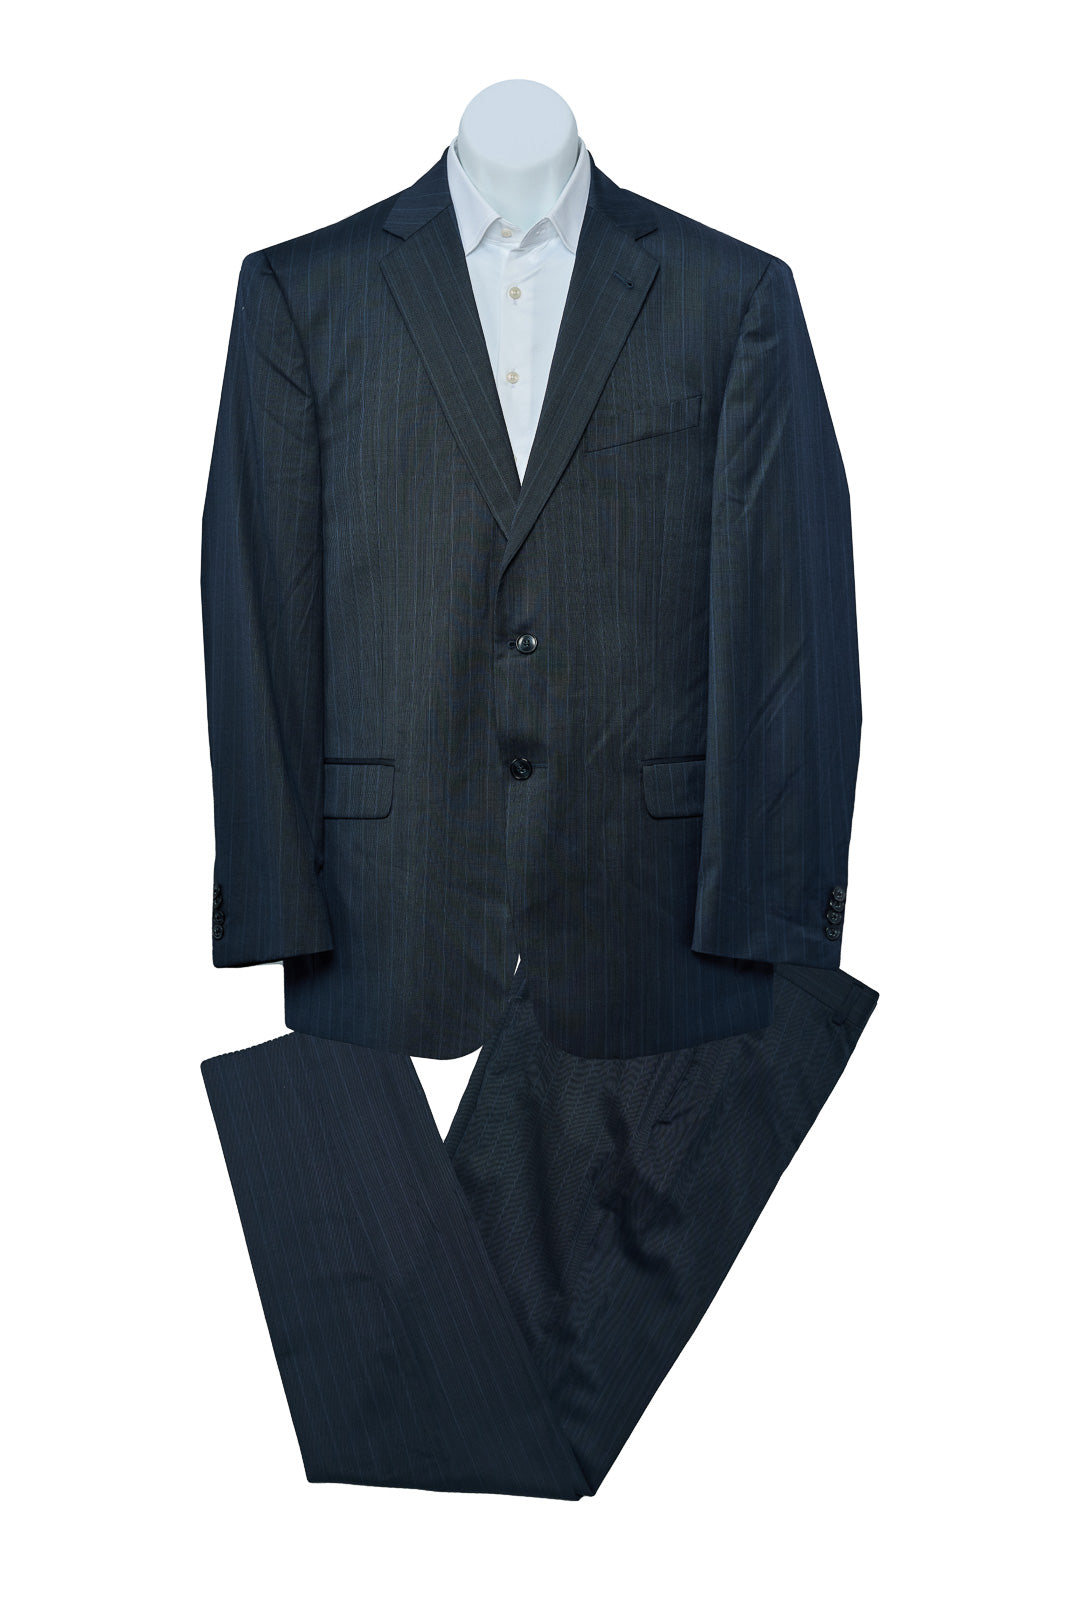 Electric Blue Pinstripe Suit